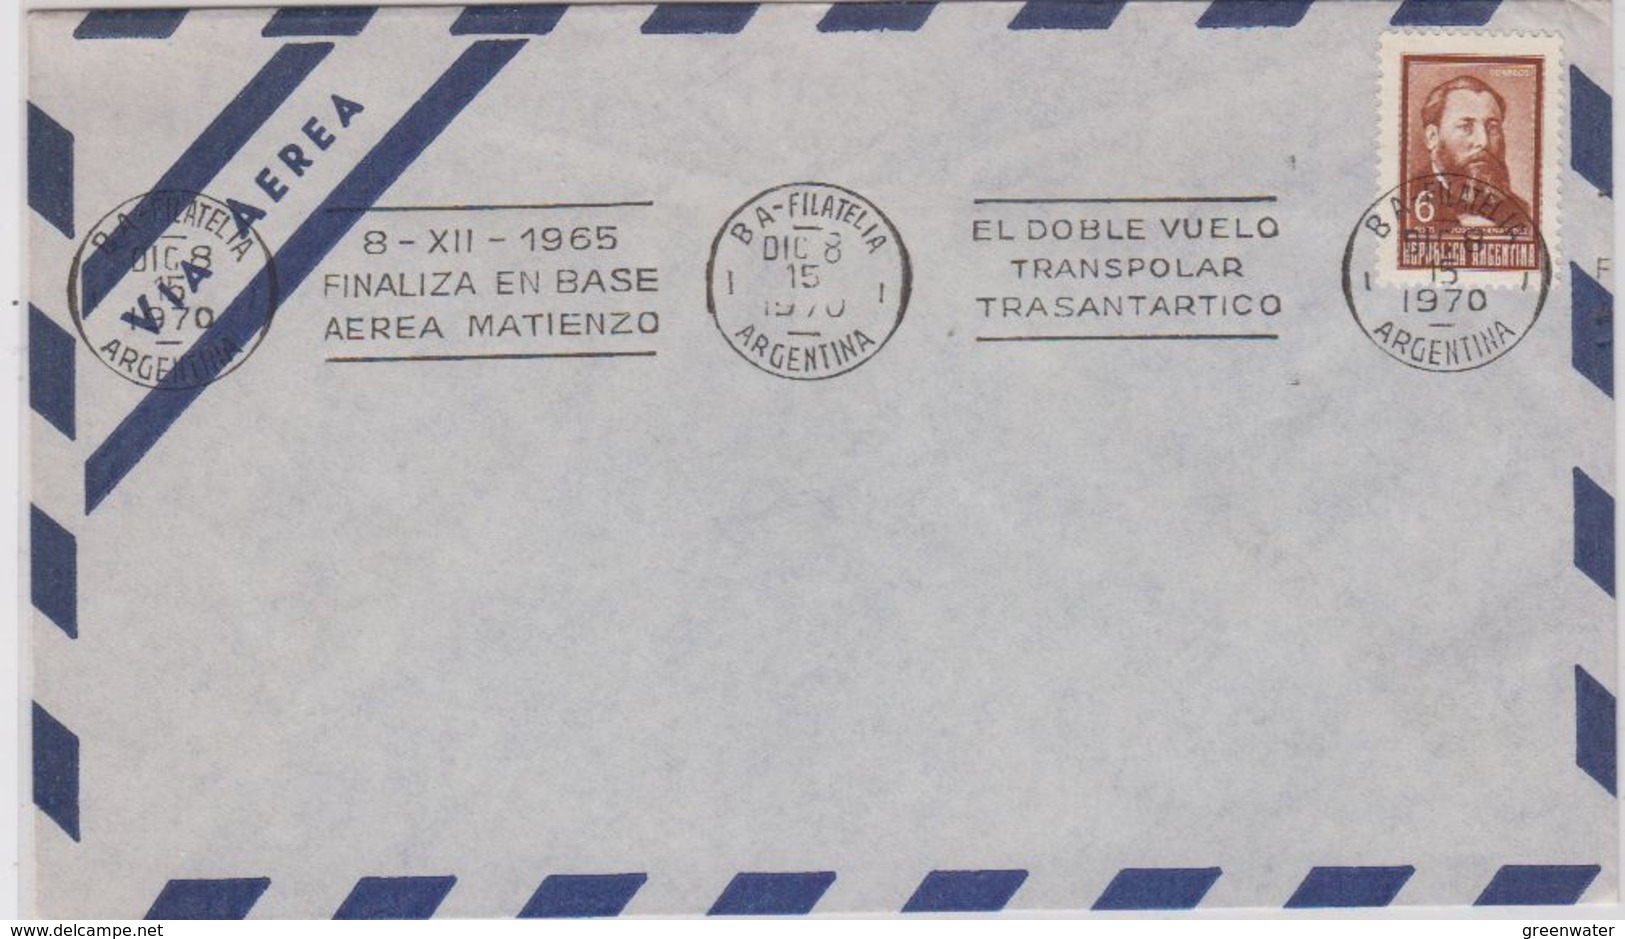 Argentina 1970 Finaliza En Base Aerea Matienzo El Doble Vuelo Transpolar Transantartico Cover Ca 8 Oct 1970 (41271) - Vols Polaires